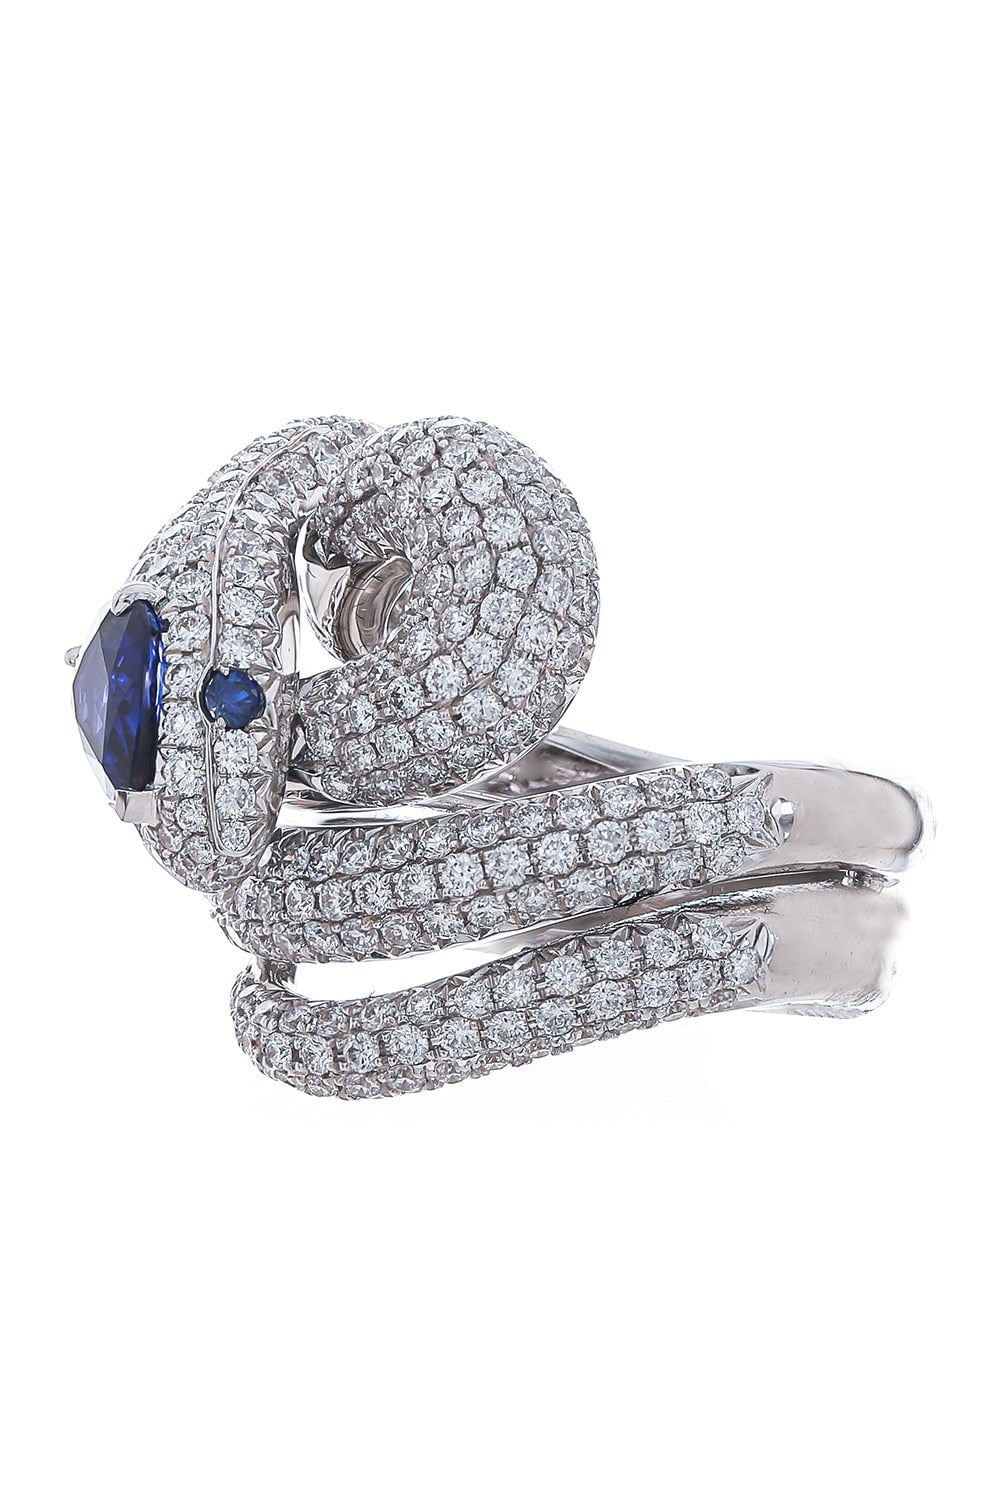 STEFERE-Diamond Blue Sapphire Snake Ring-WHITE GOLD